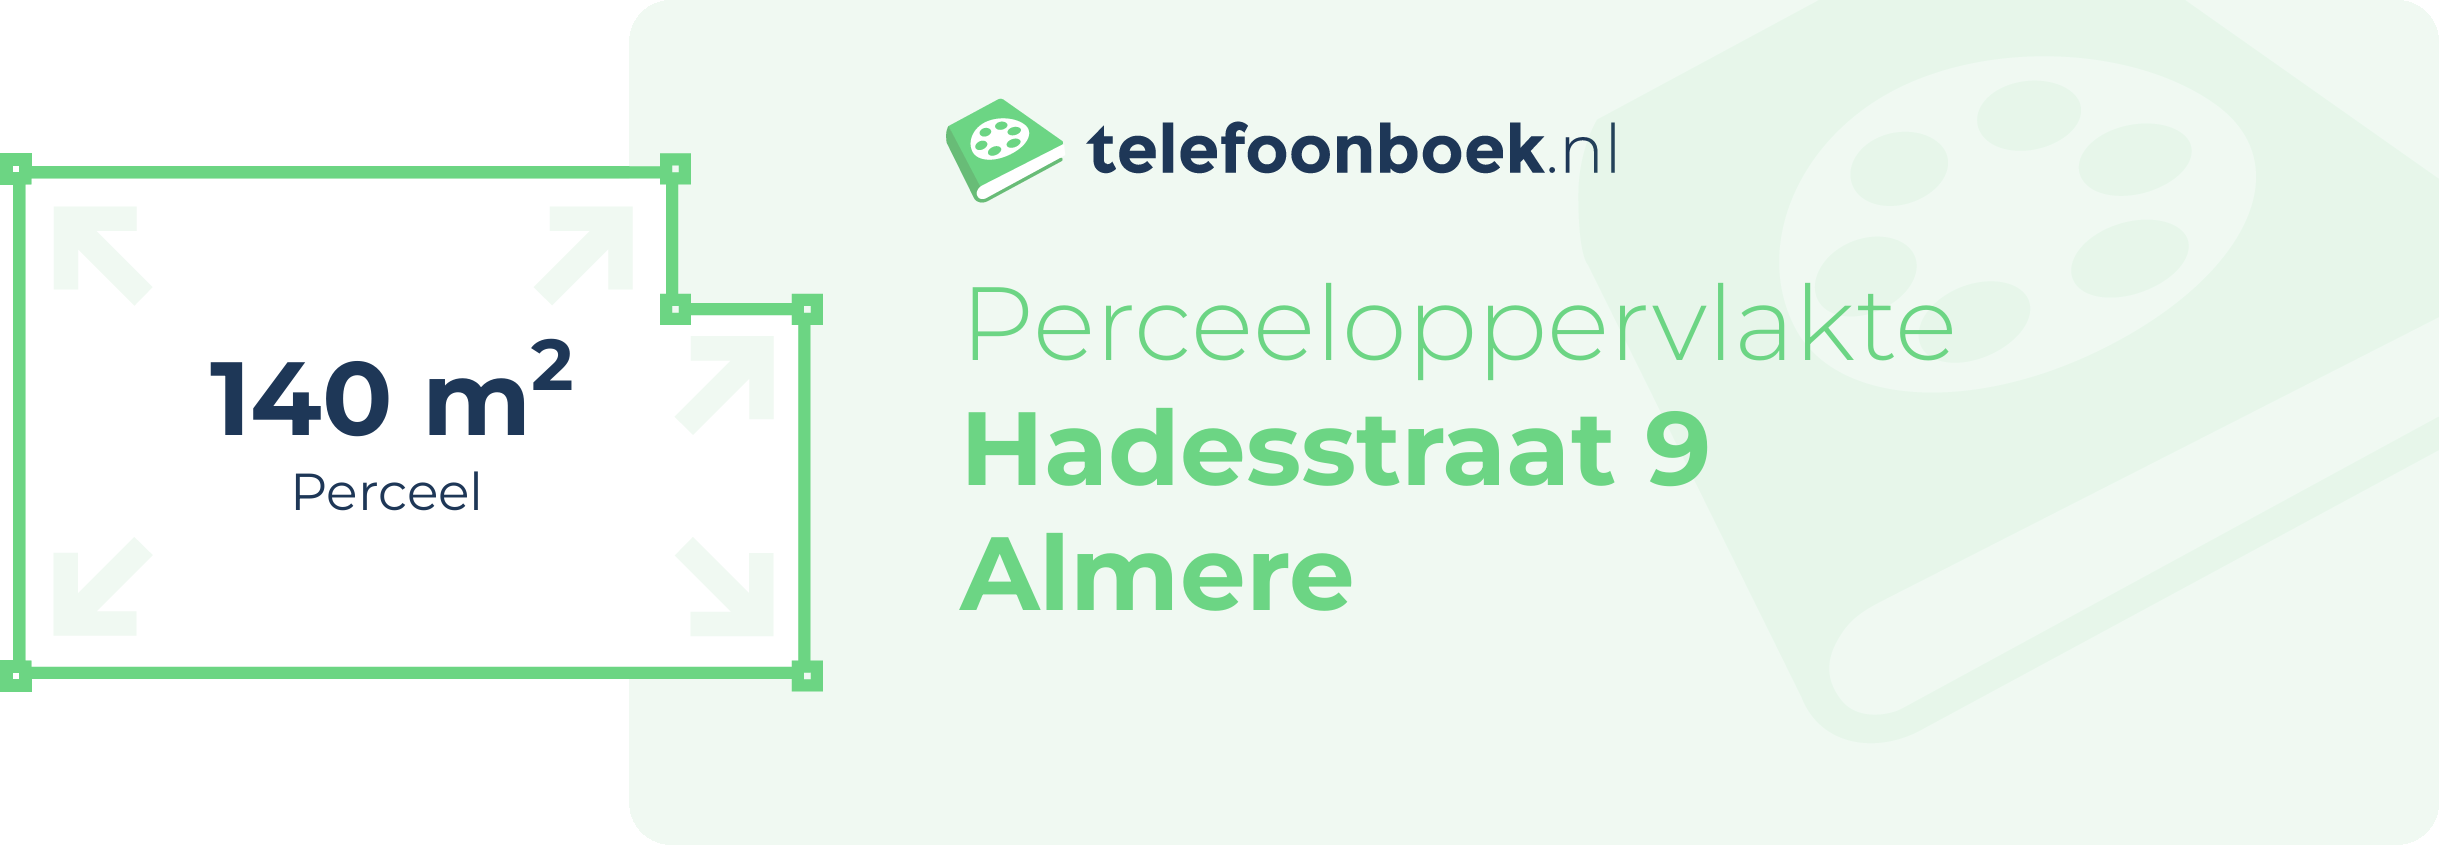 Perceeloppervlakte Hadesstraat 9 Almere